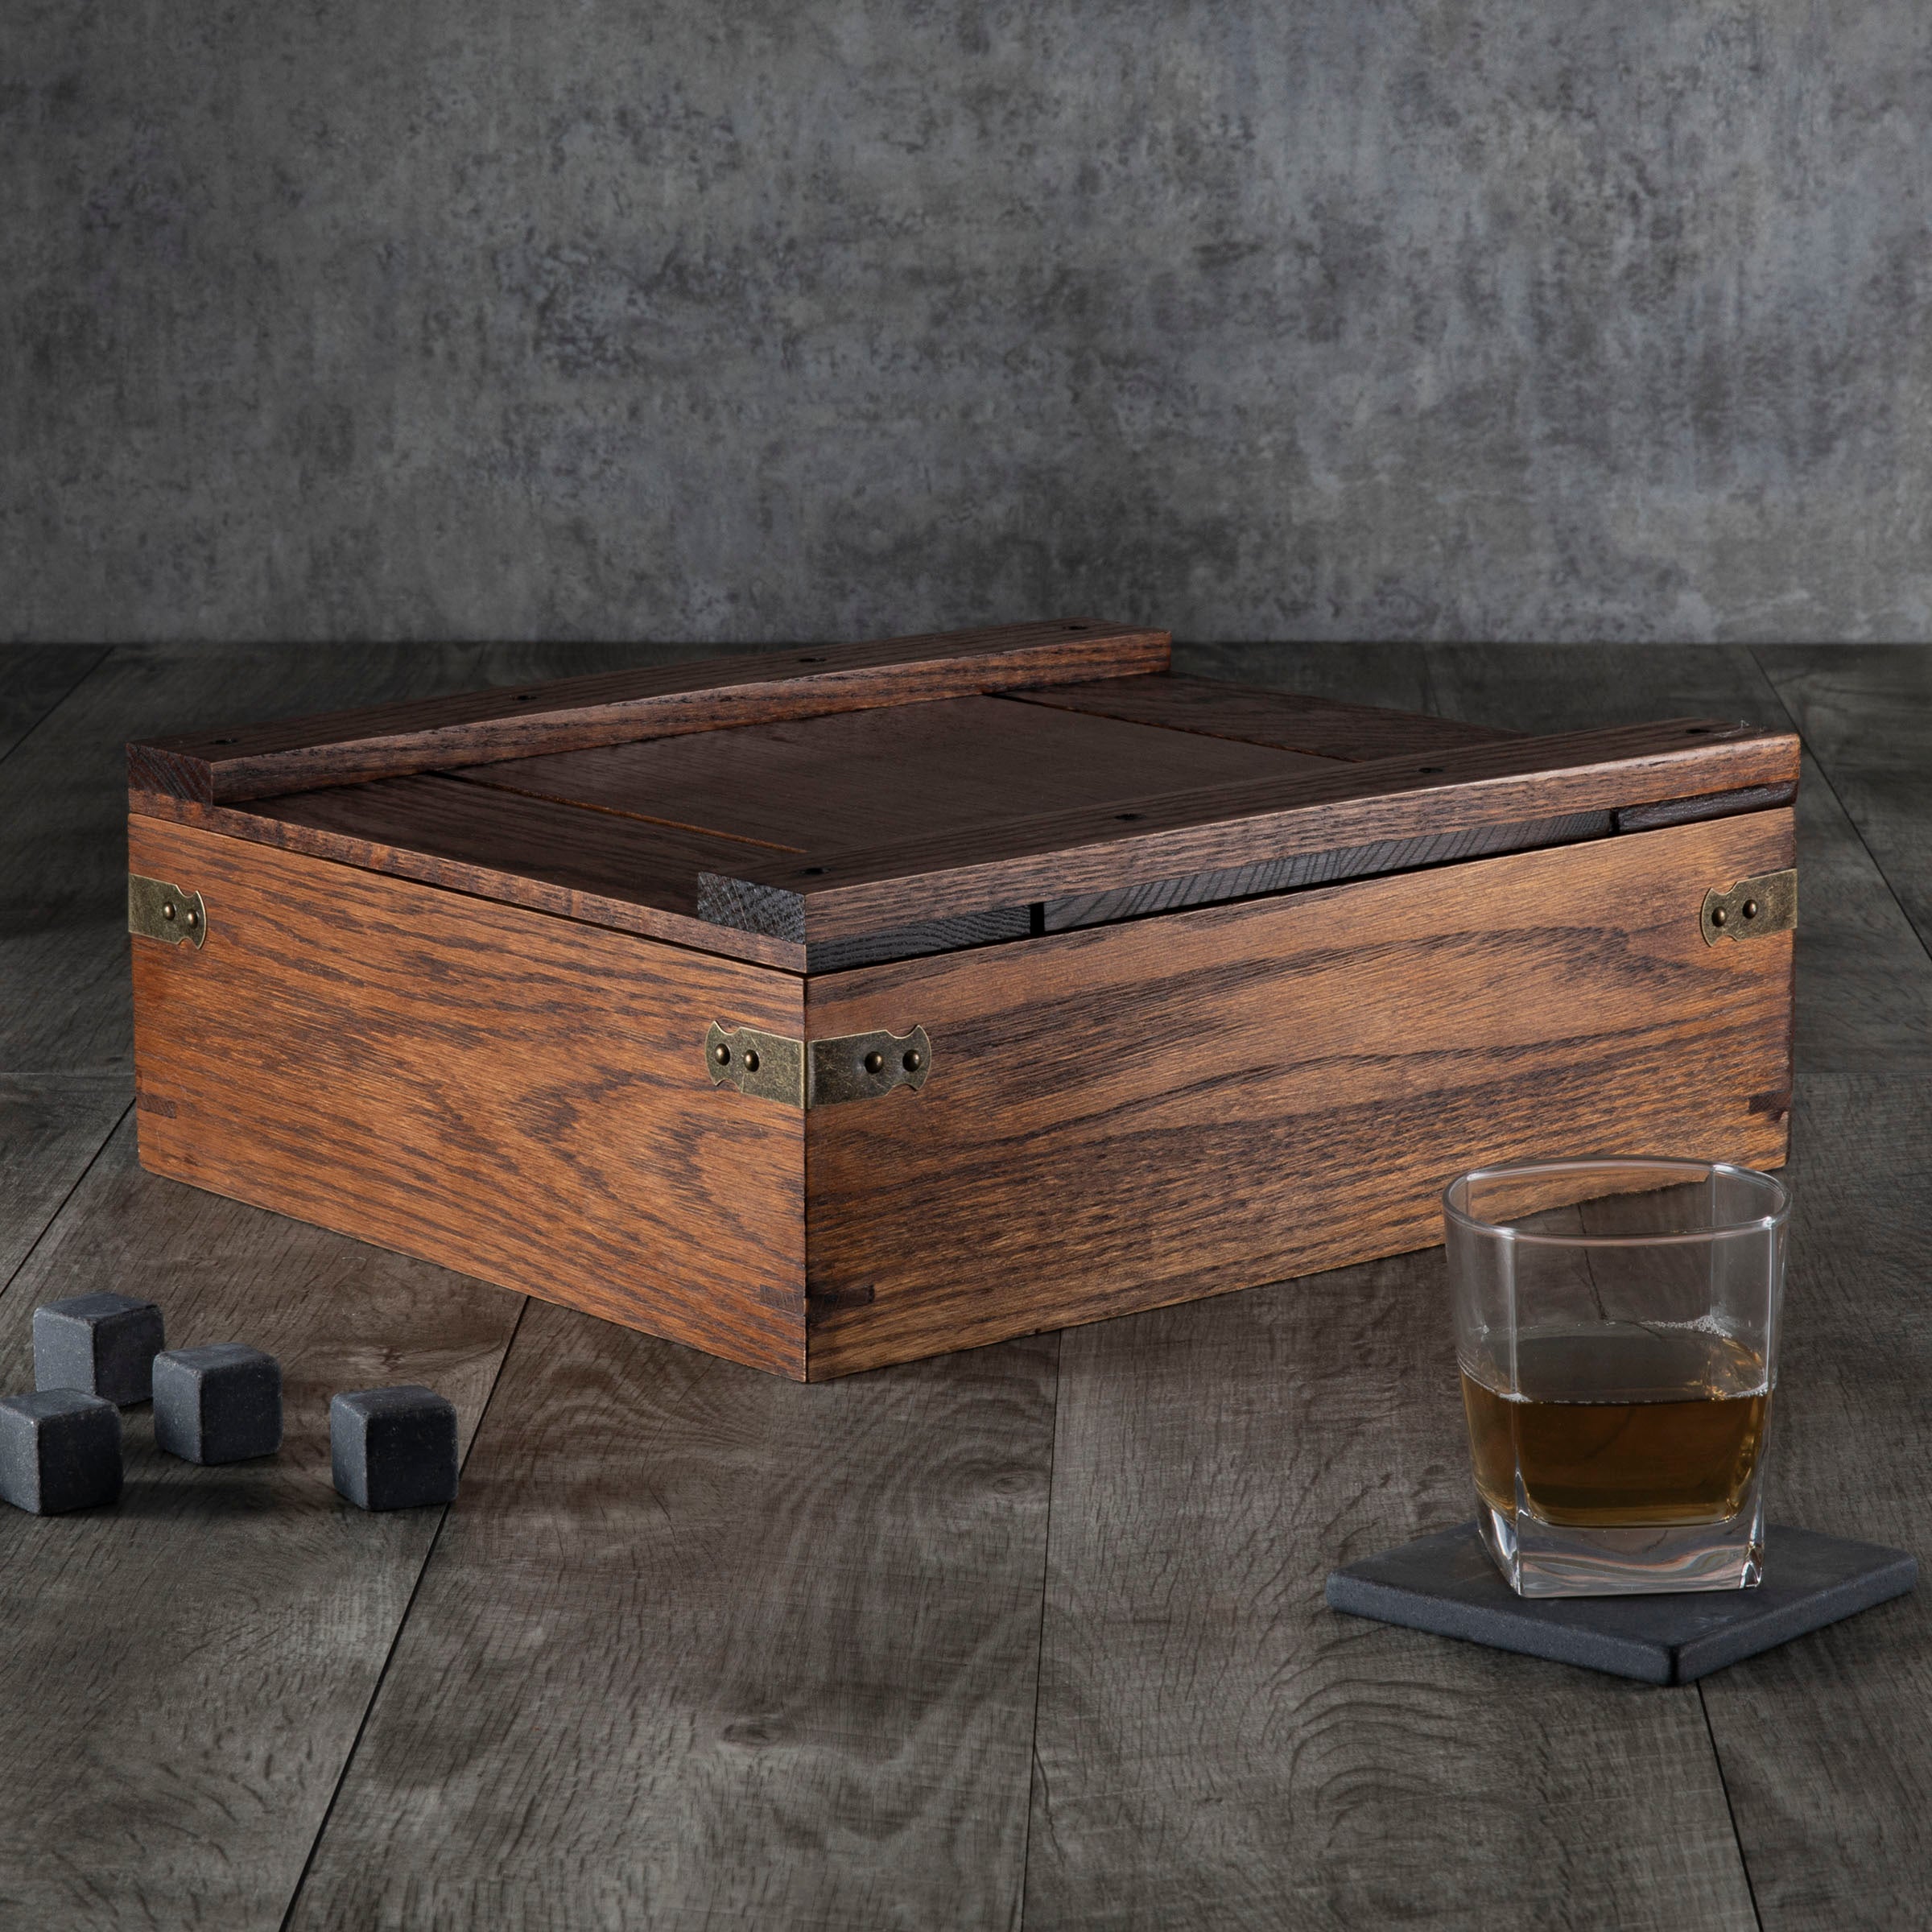 Atlanta Falcons - Whiskey Box Gift Set